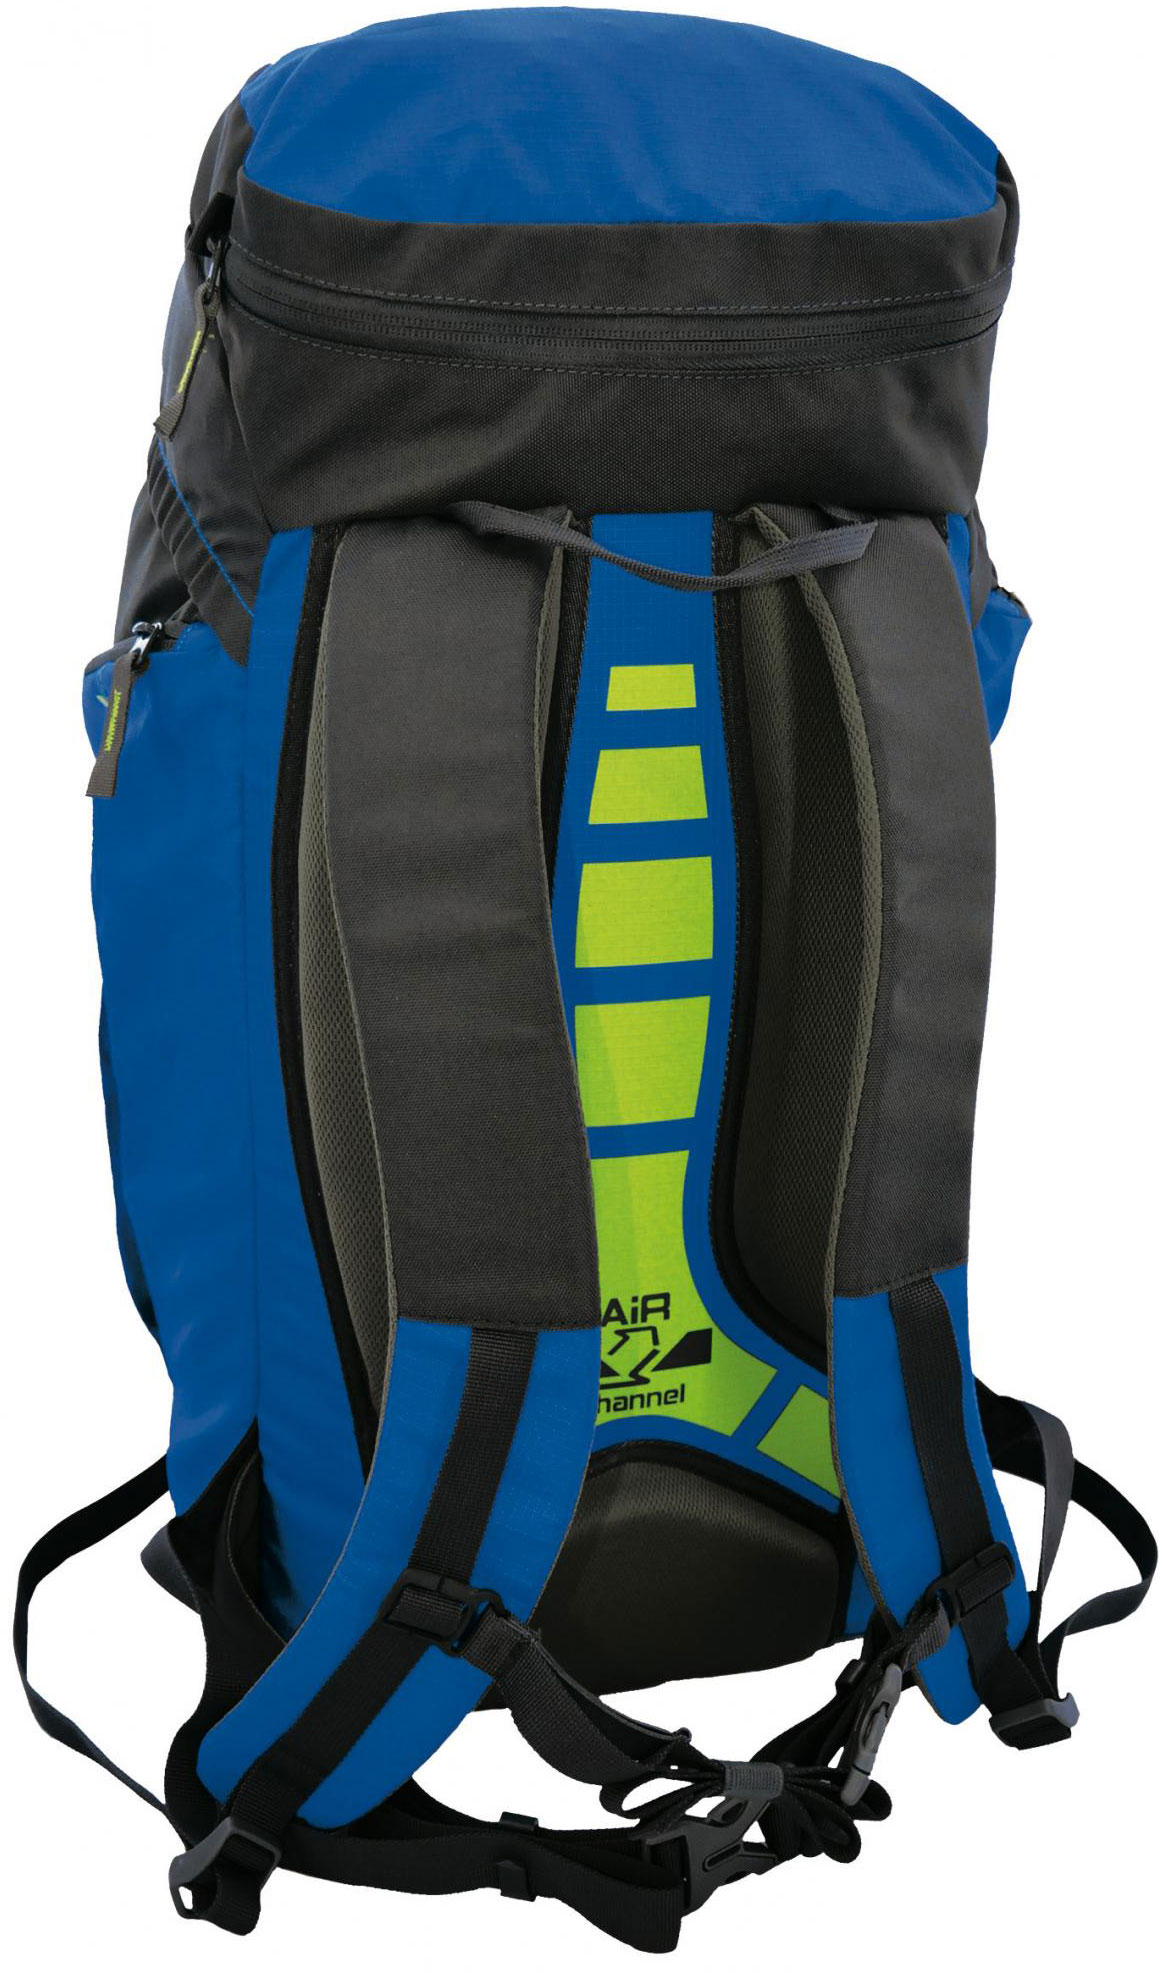 Multipurpose hiking backpack